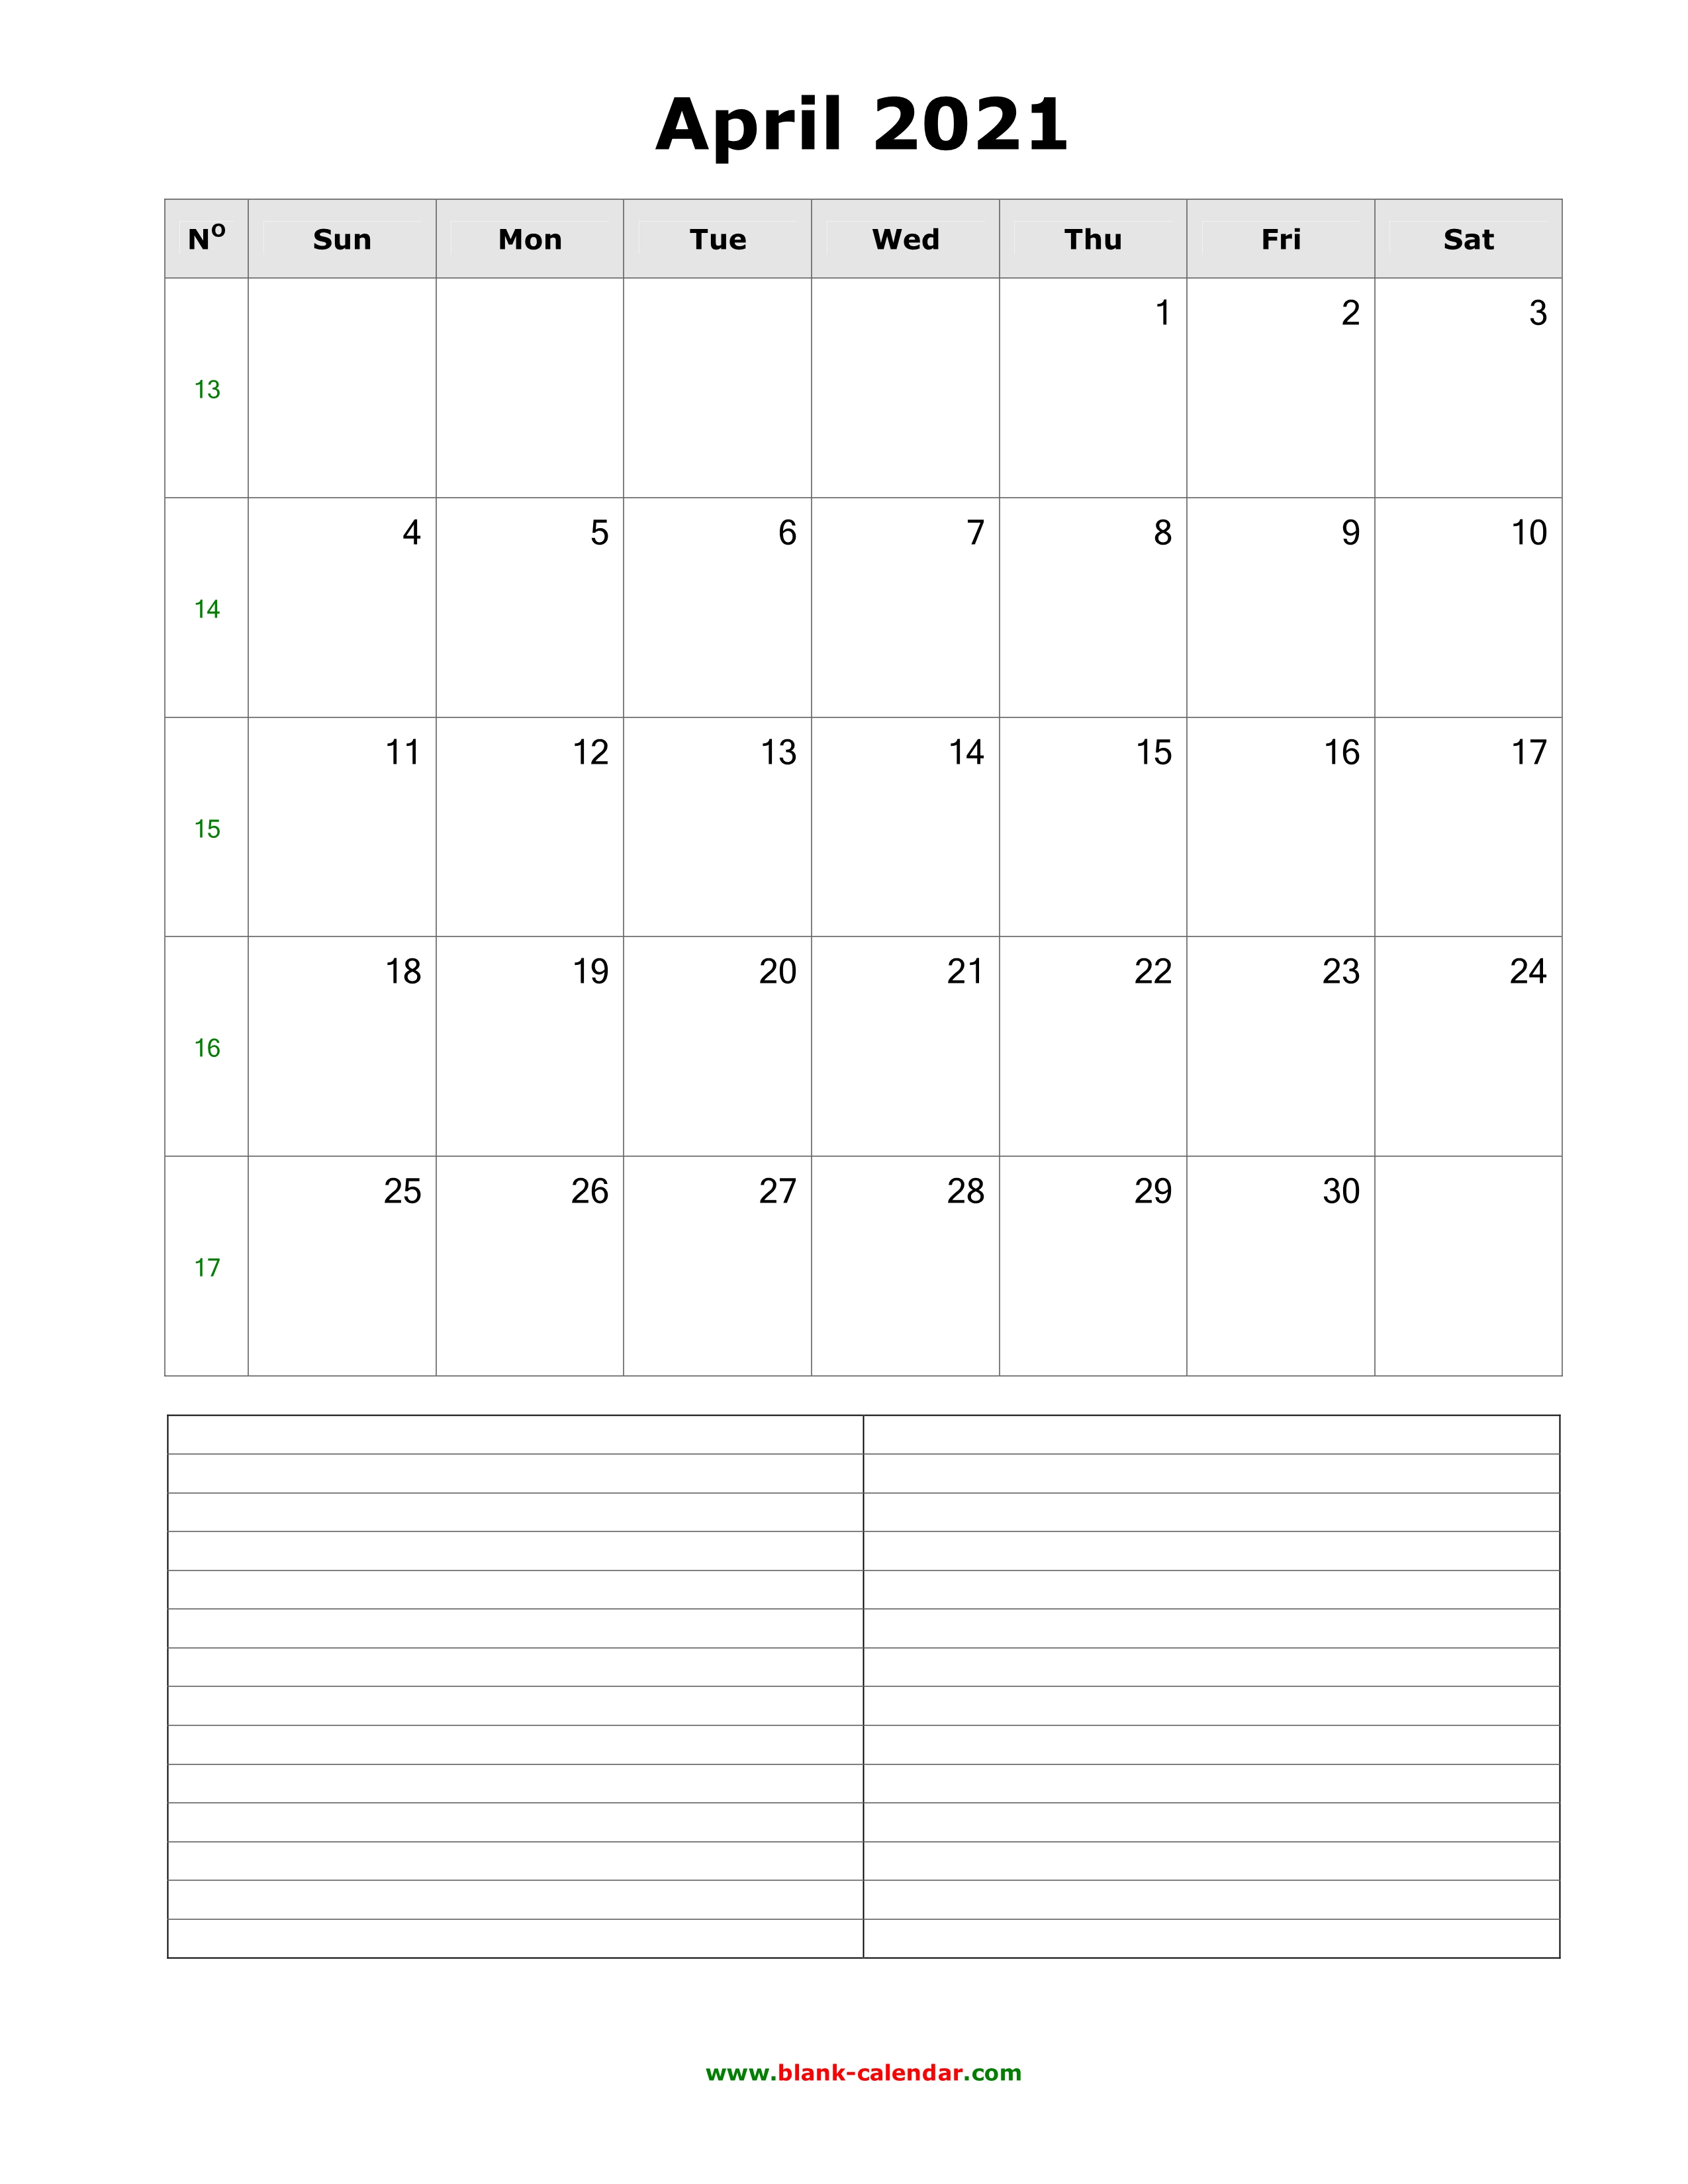 april 2021 vertical calendar Download April 2021 Blank Calendar With Space For Notes Vertical april 2021 vertical calendar